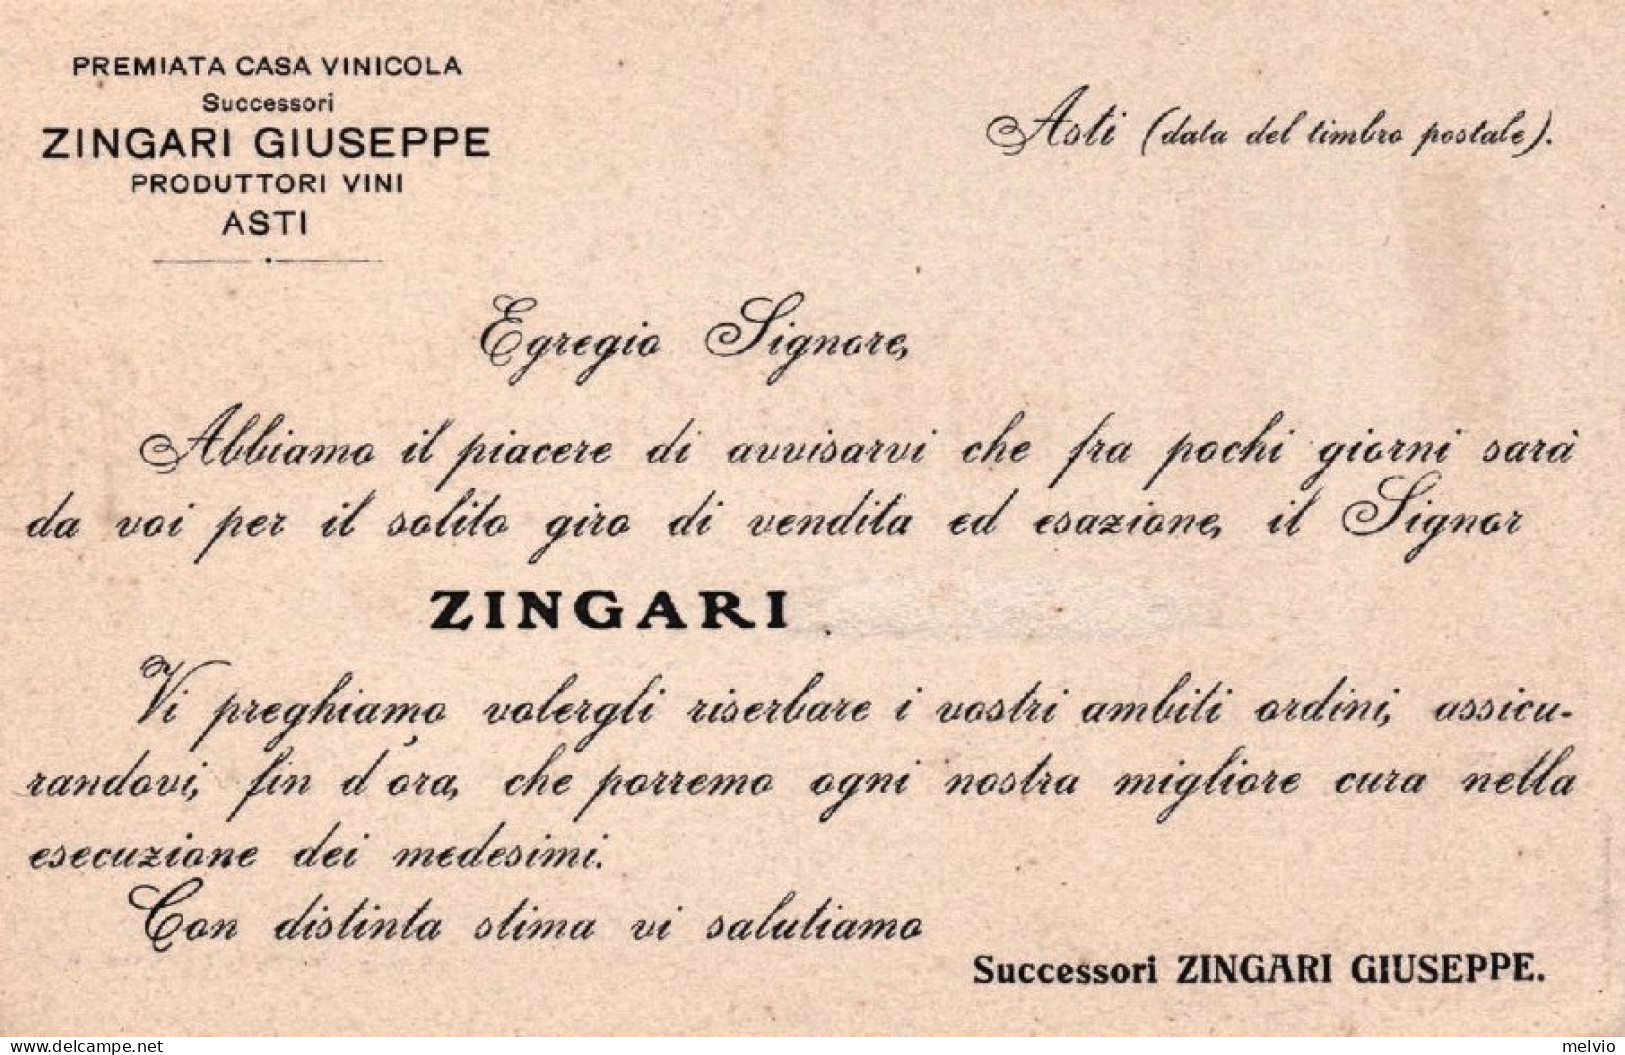 1930ca.-Premiata Casa Vinicola Zingari Produttore Vini Asti - Asti